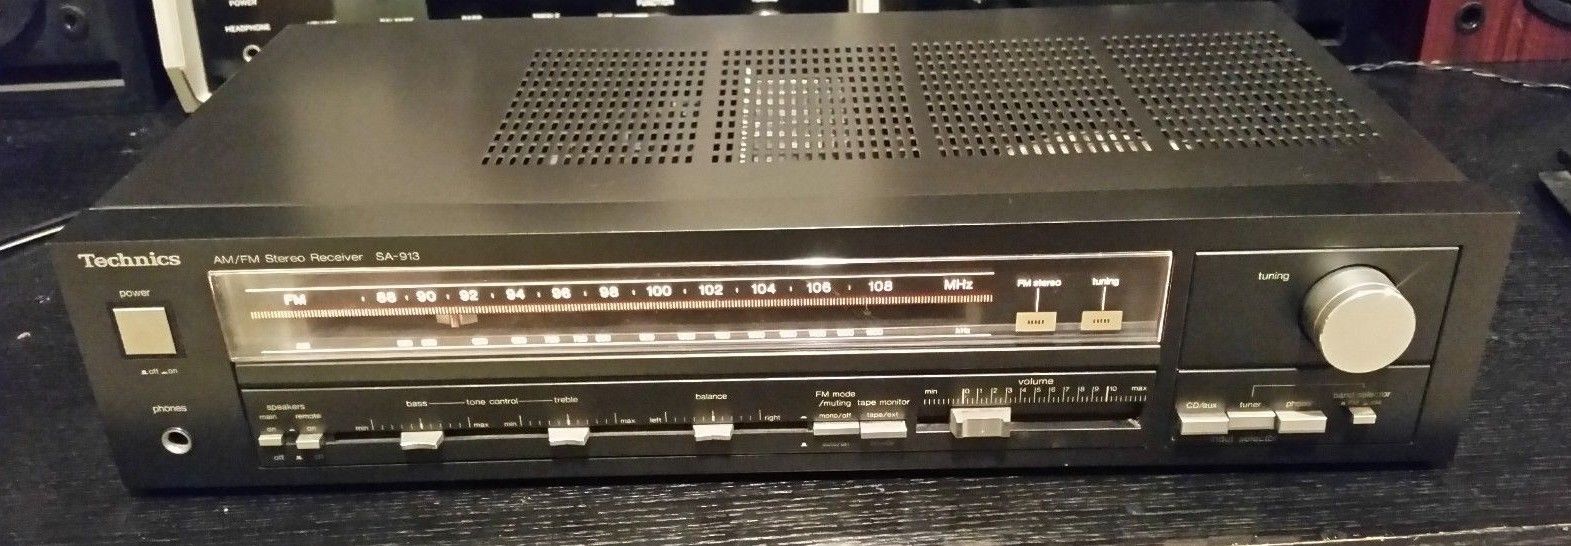 Vintage 1980s Black Technics SA-913 Stereo Receiver AM/FM